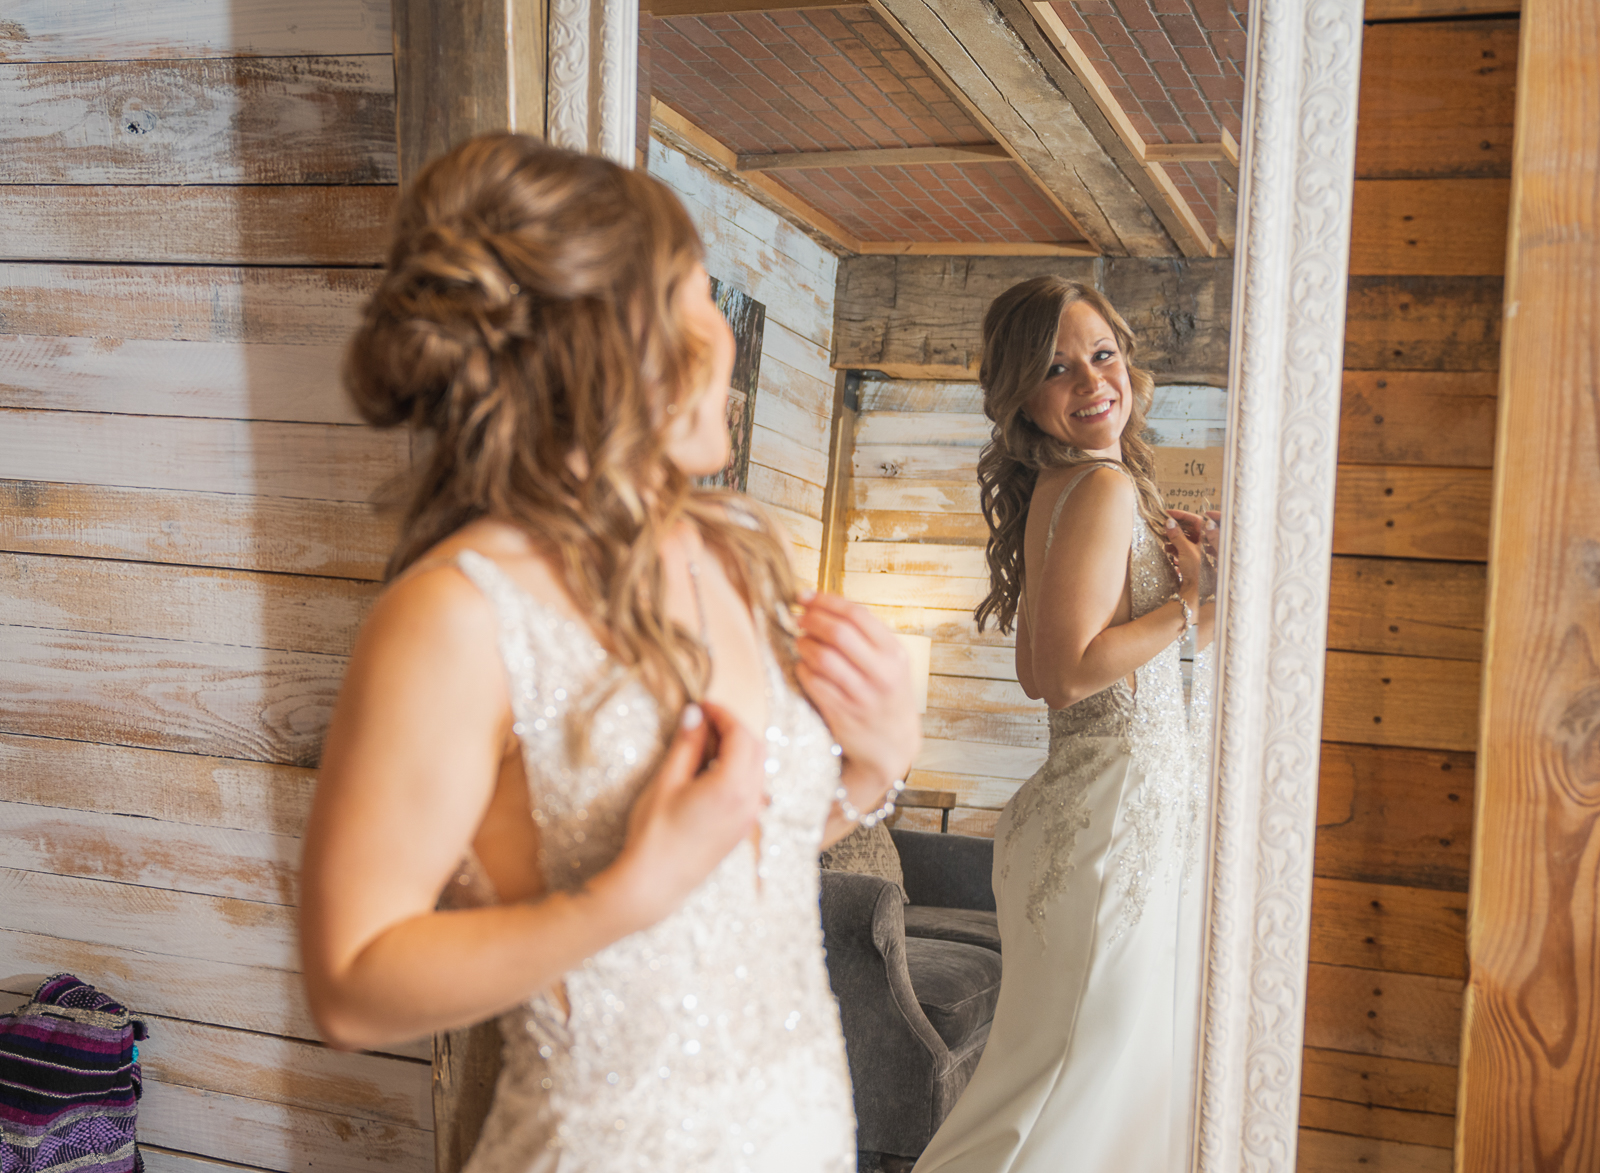 Bride getting ready, wedding preparation, wedding dress, mirror, smile, fall wedding, rustic outdoor wedding ceremony at White Birch Barn